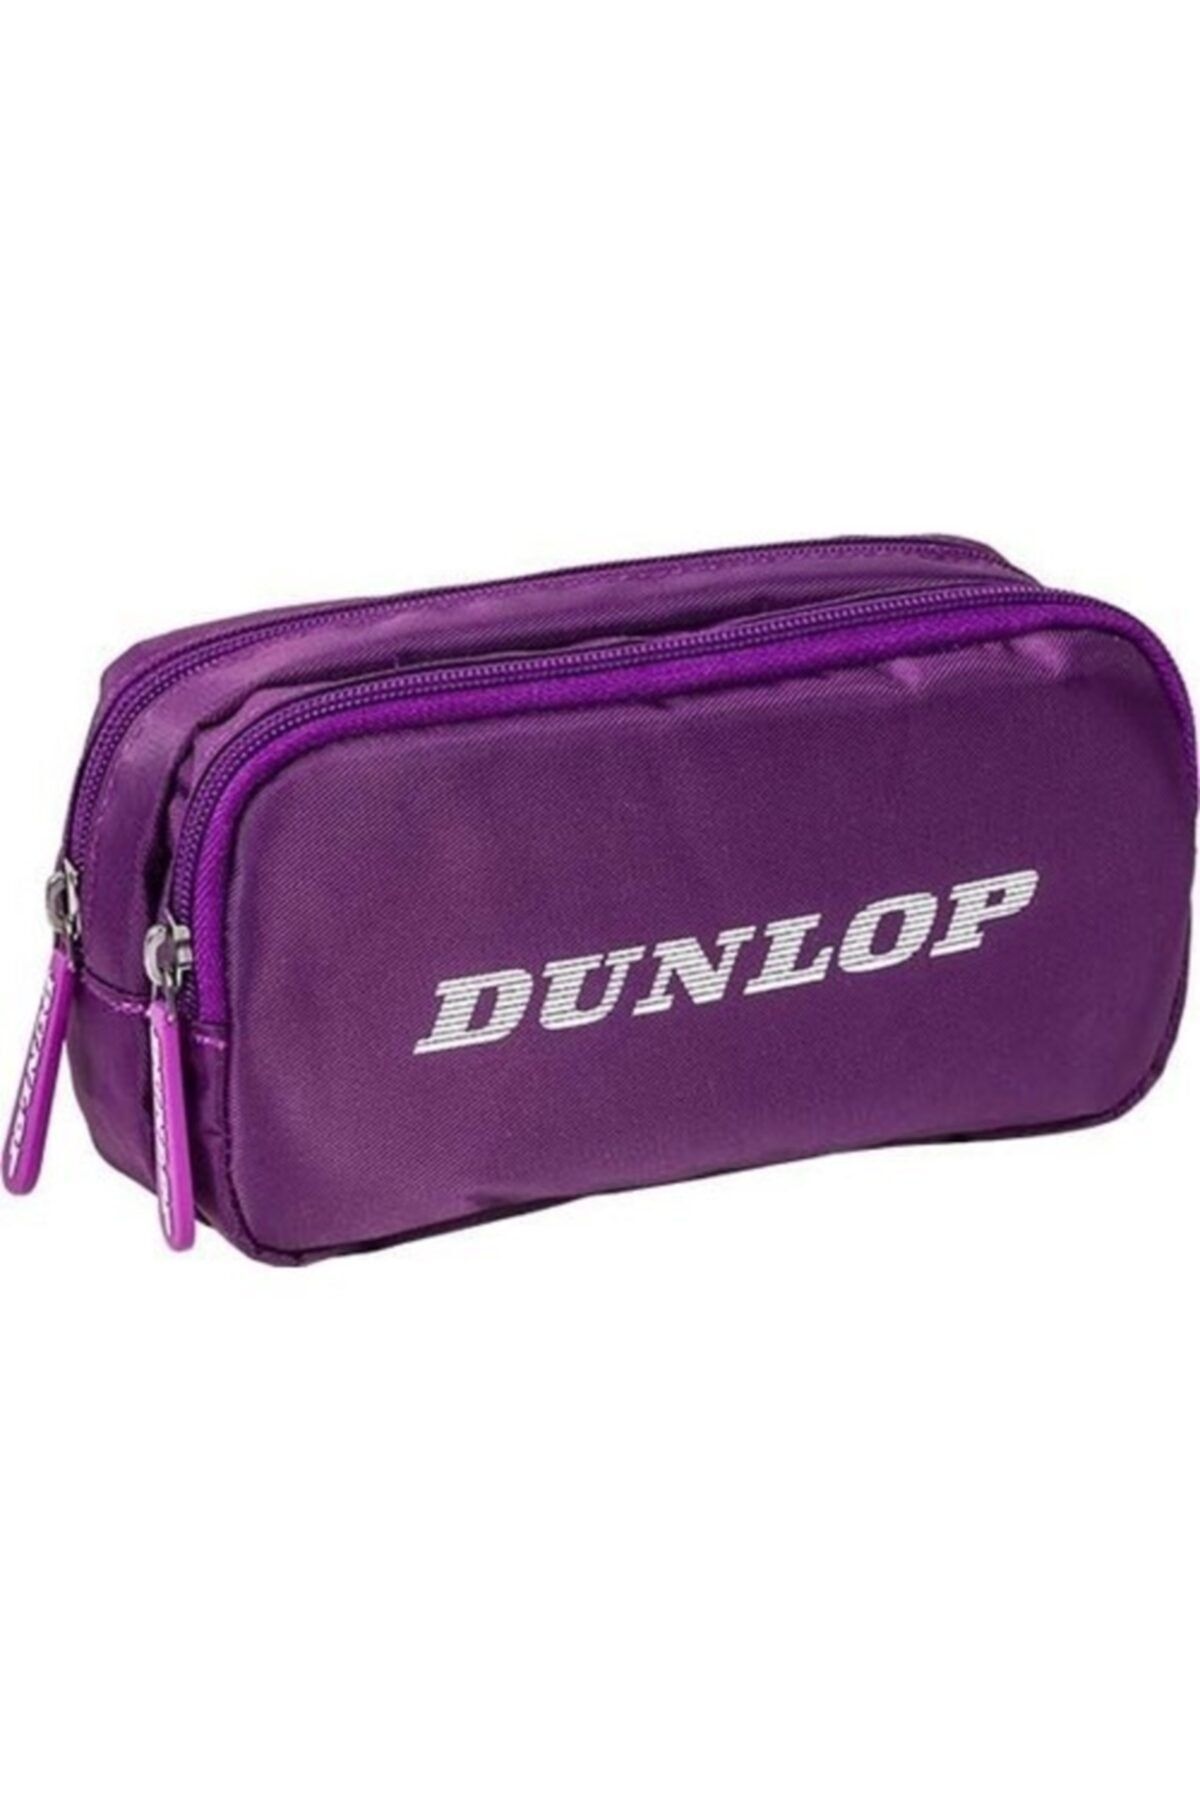 Dunlop Kalem Çantası Dpklk9484